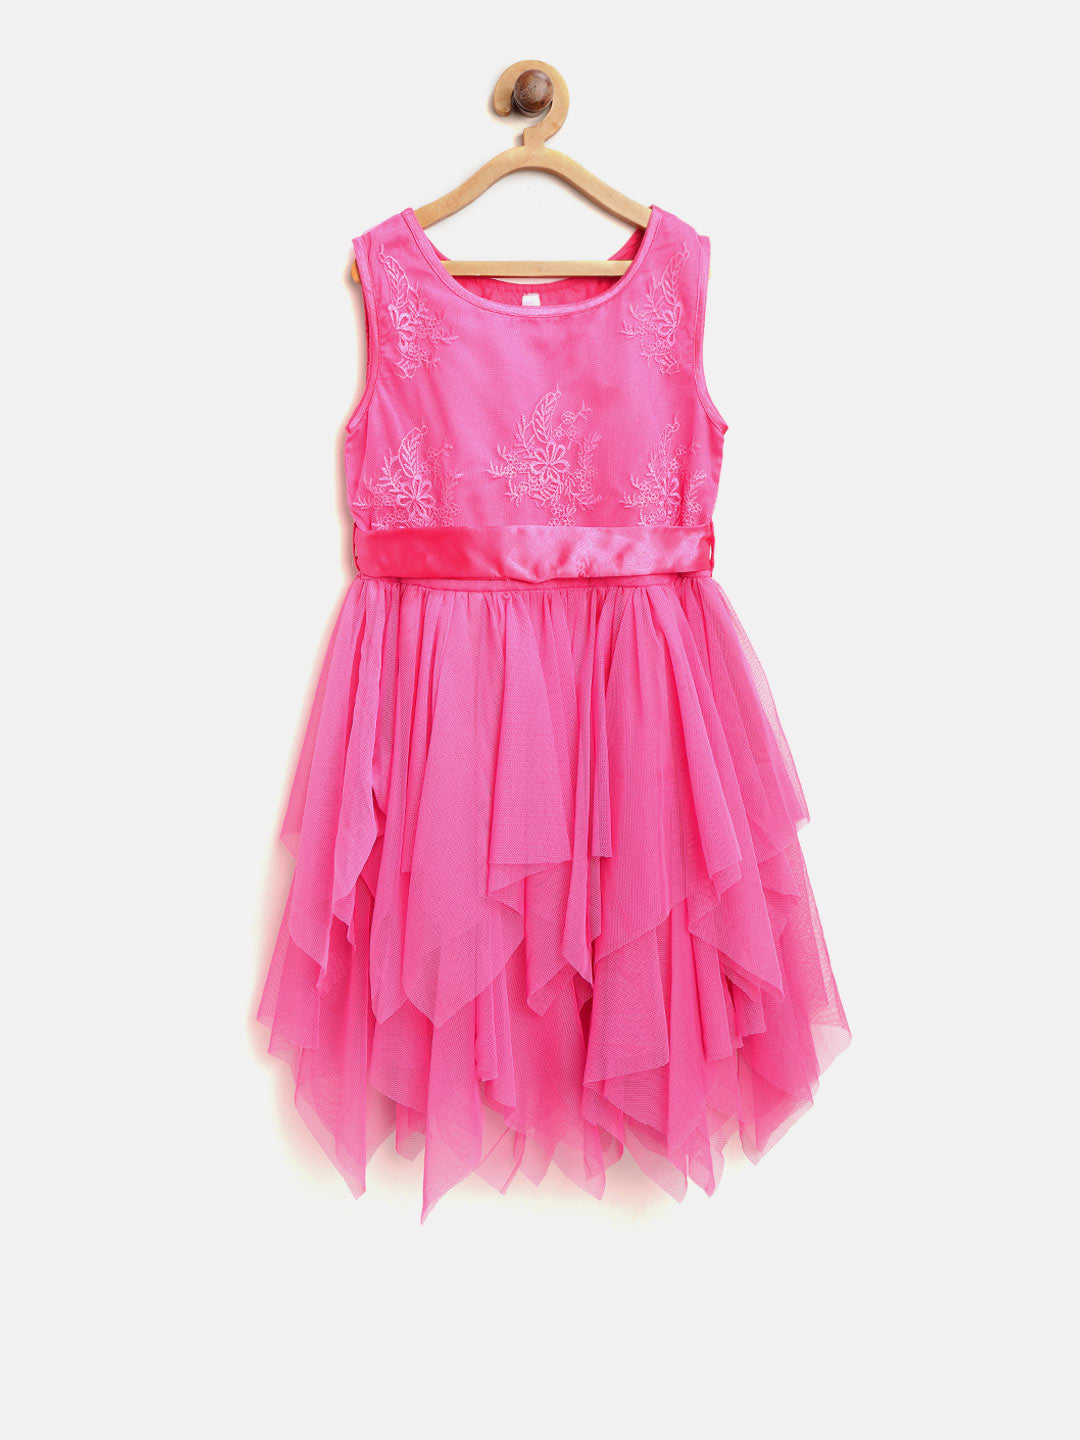 Gilr's Lace Embroidered Asymmetric Hemline Net Pink Party Dress - StyleStone Kid